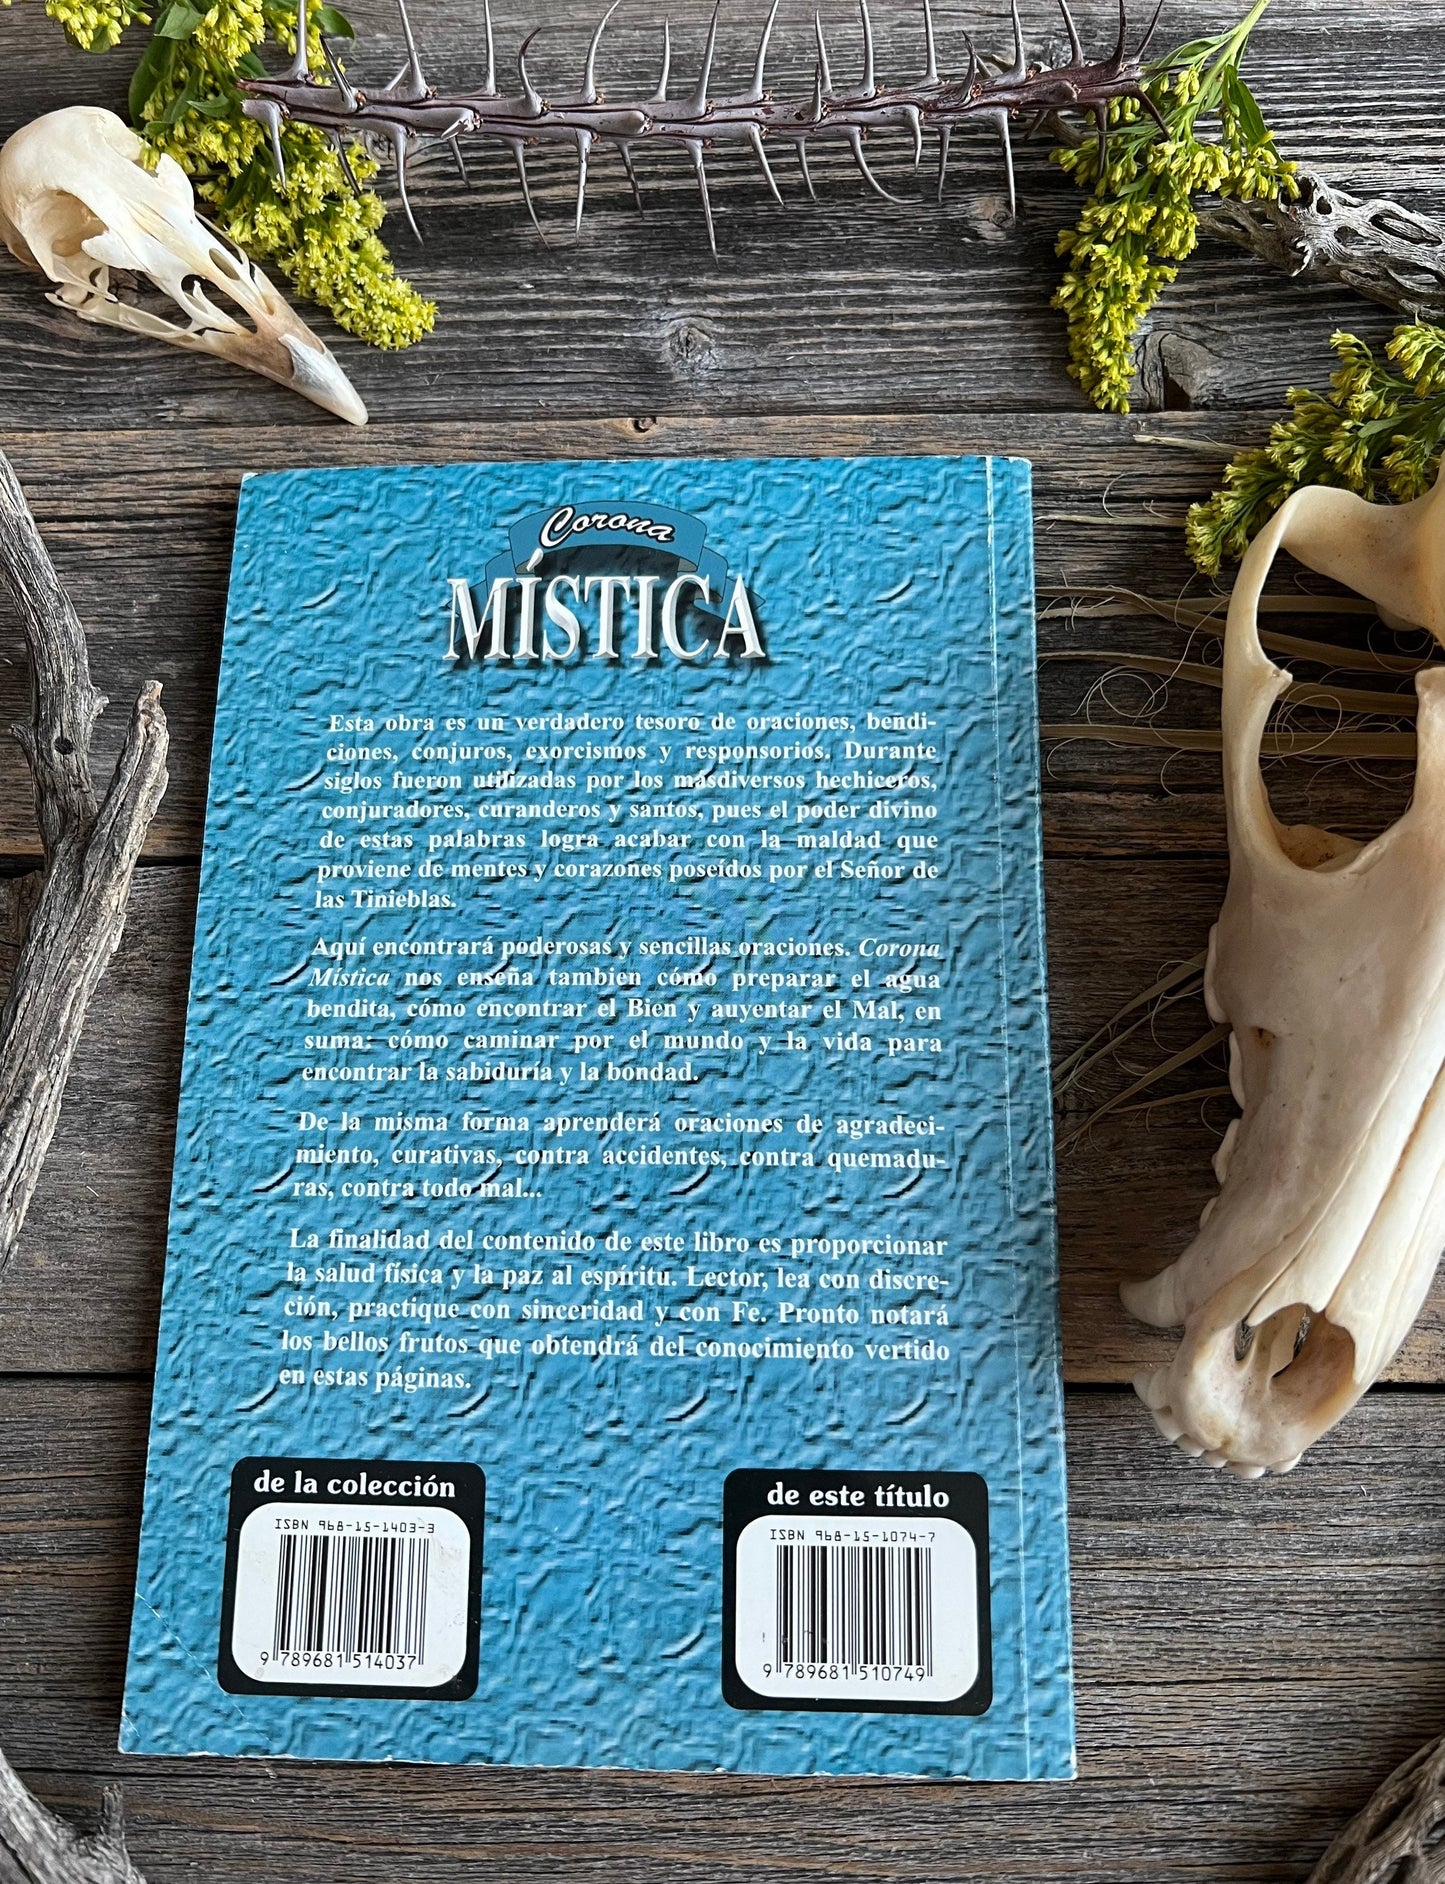 Corona Mística + From Mexico *NEW BOOK* Libro